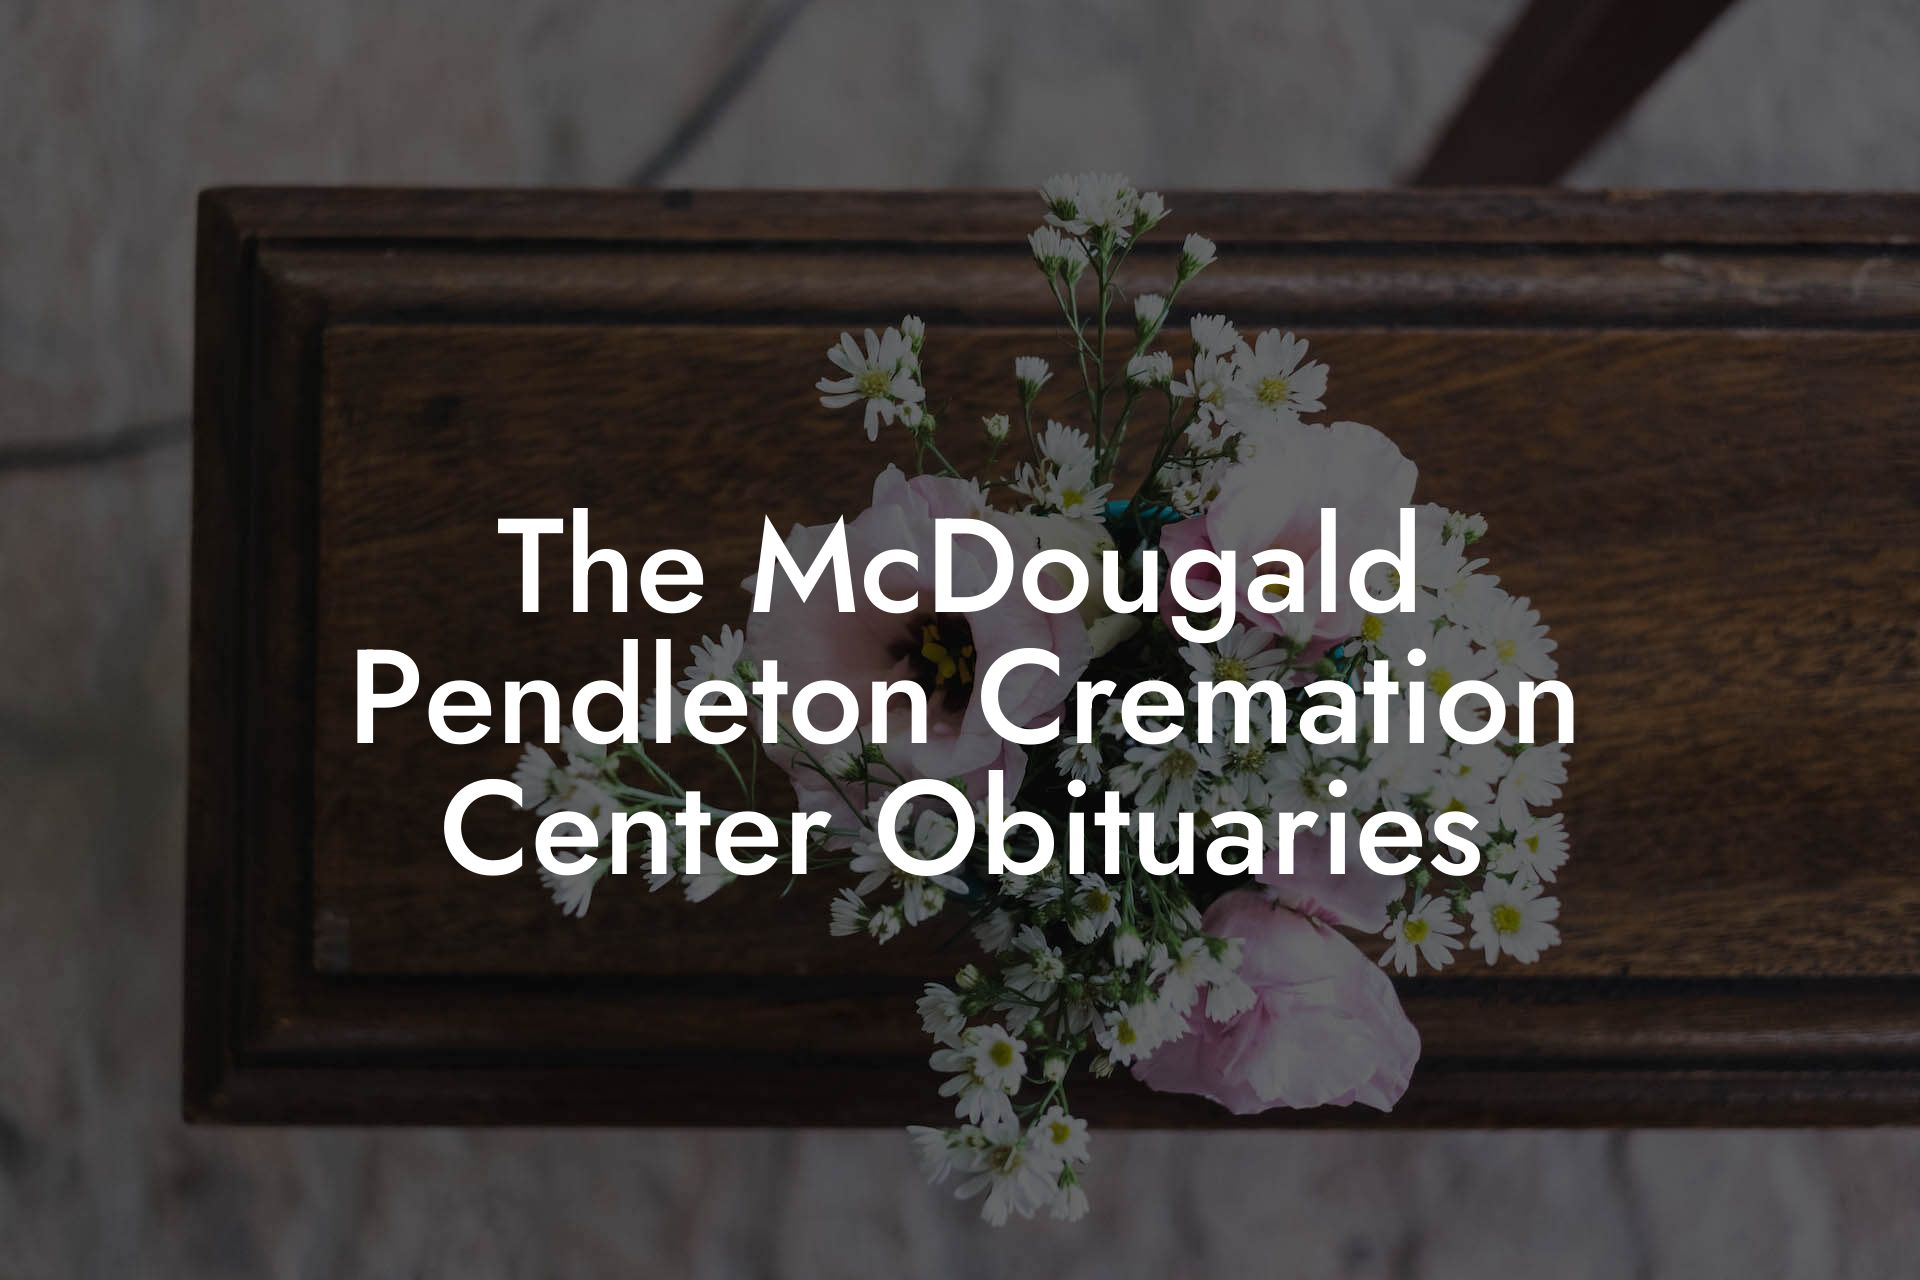 The McDougald Pendleton Cremation Center Obituaries